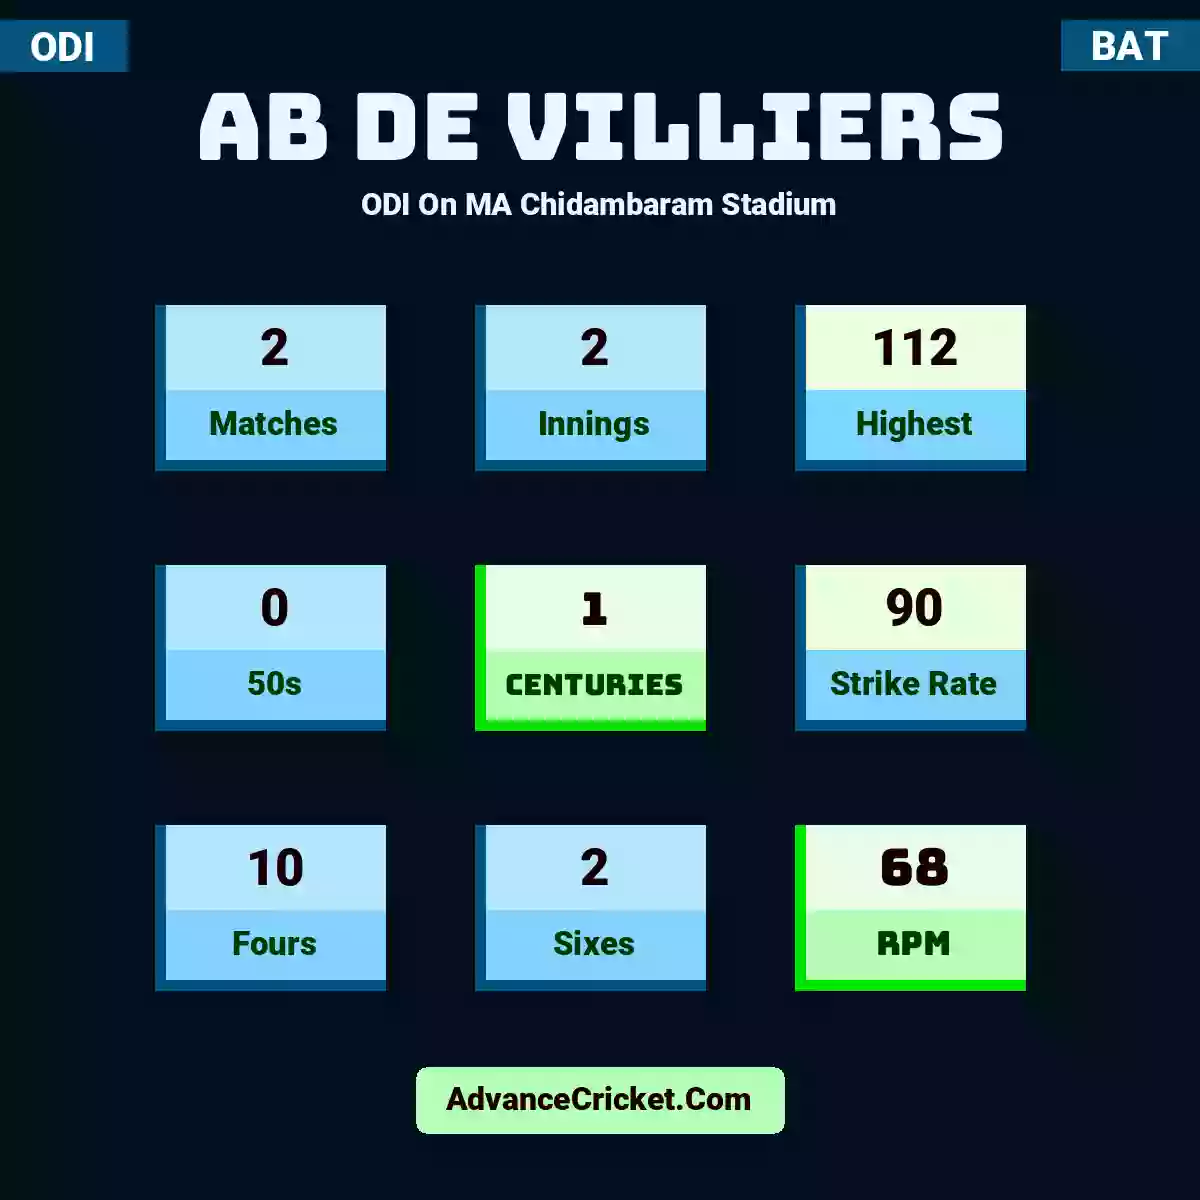 AB de Villiers ODI  On MA Chidambaram Stadium, AB de Villiers played 2 matches, scored 112 runs as highest, 0 half-centuries, and 1 centuries, with a strike rate of 90. A.Villiers hit 10 fours and 2 sixes, with an RPM of 68.